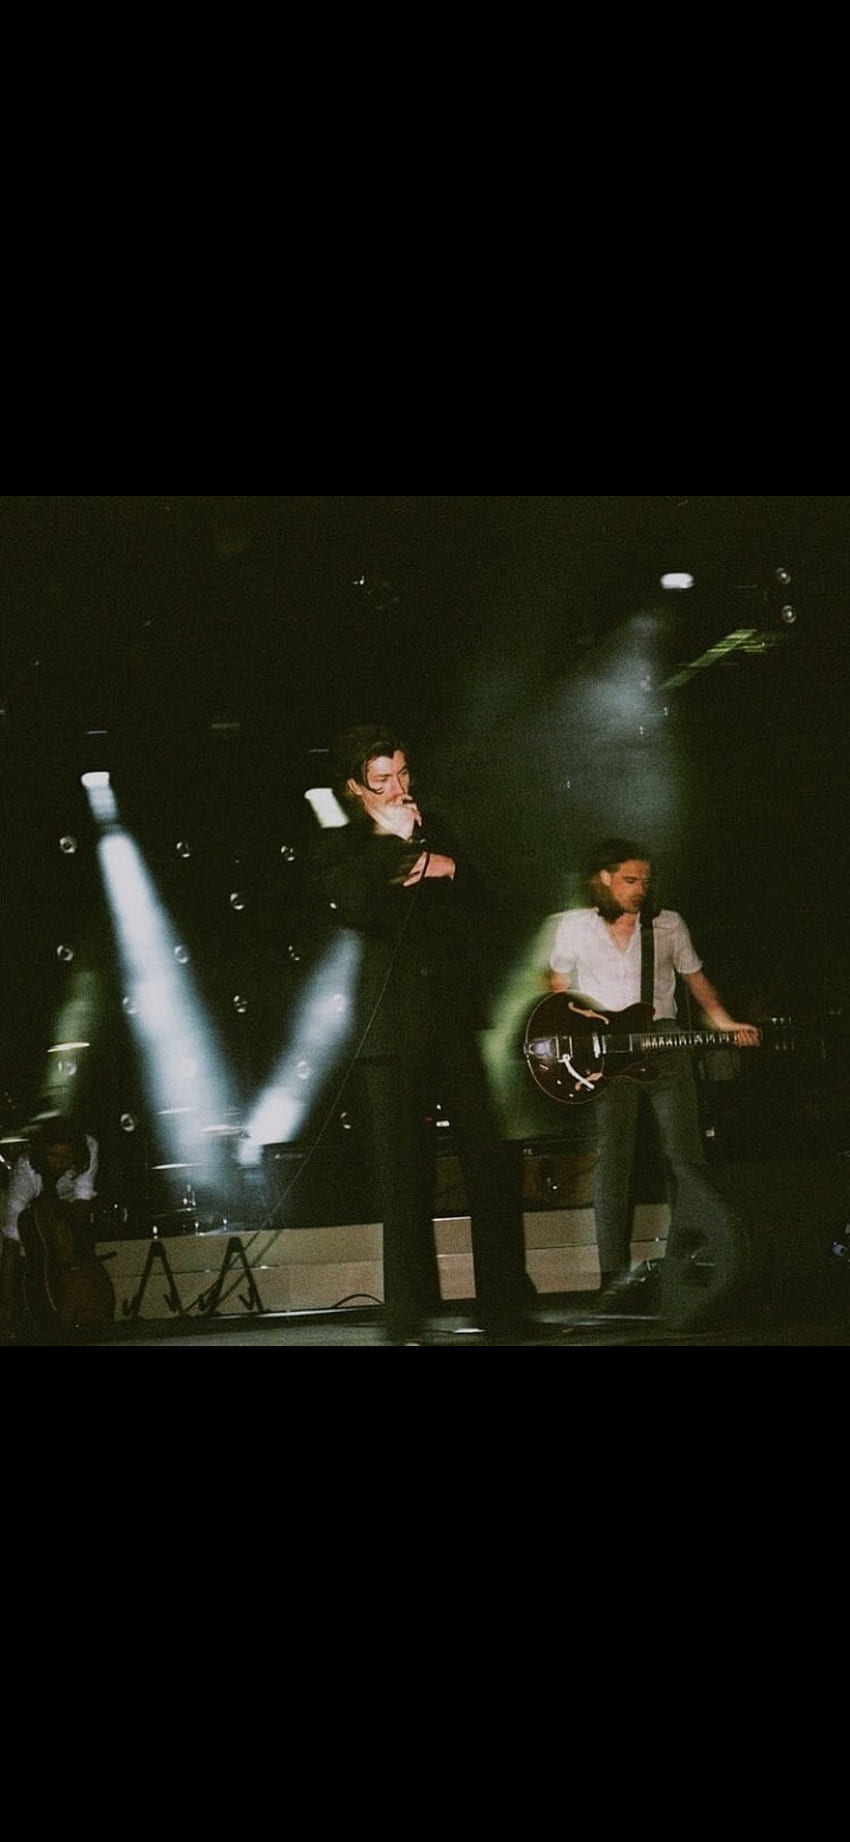 Turner, Alex Turner, Arctic Monkeys fondo de pantalla del teléfono